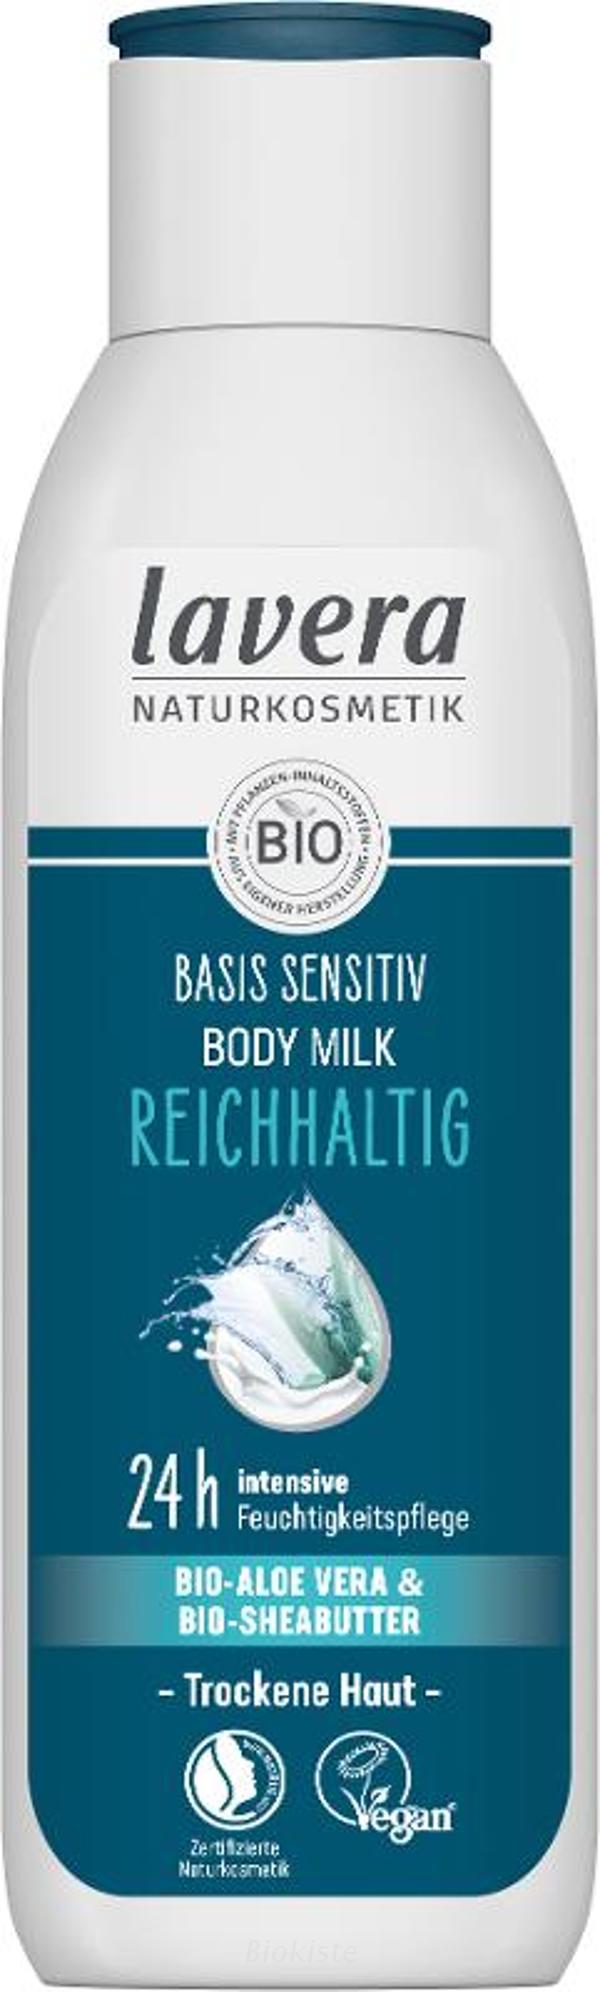 Produktfoto zu basis Sensitiv Bodymilk reichhaltig 250 ml